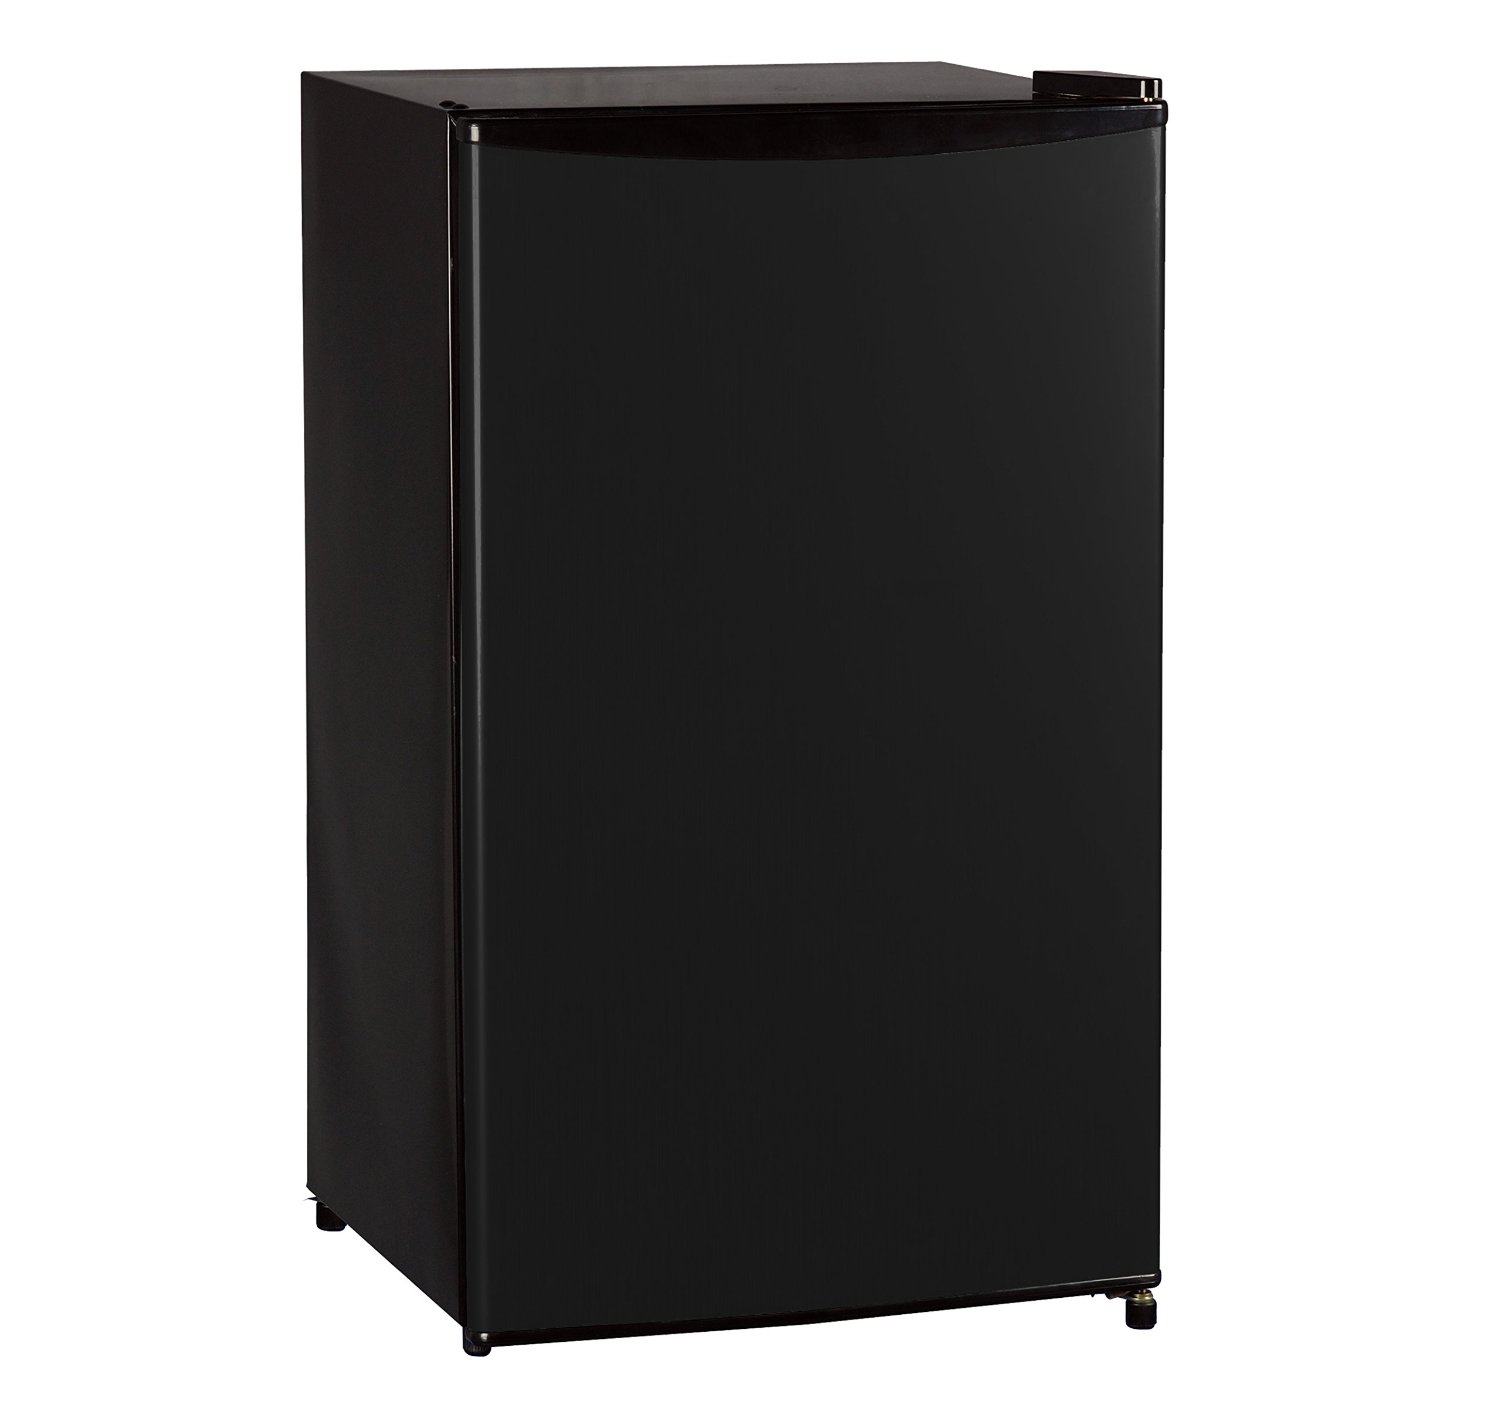 Midea WHS-121LB1 Compact Single Reversible Door Refrigerator and Freezer, 3.3 Cubic Feet, Black